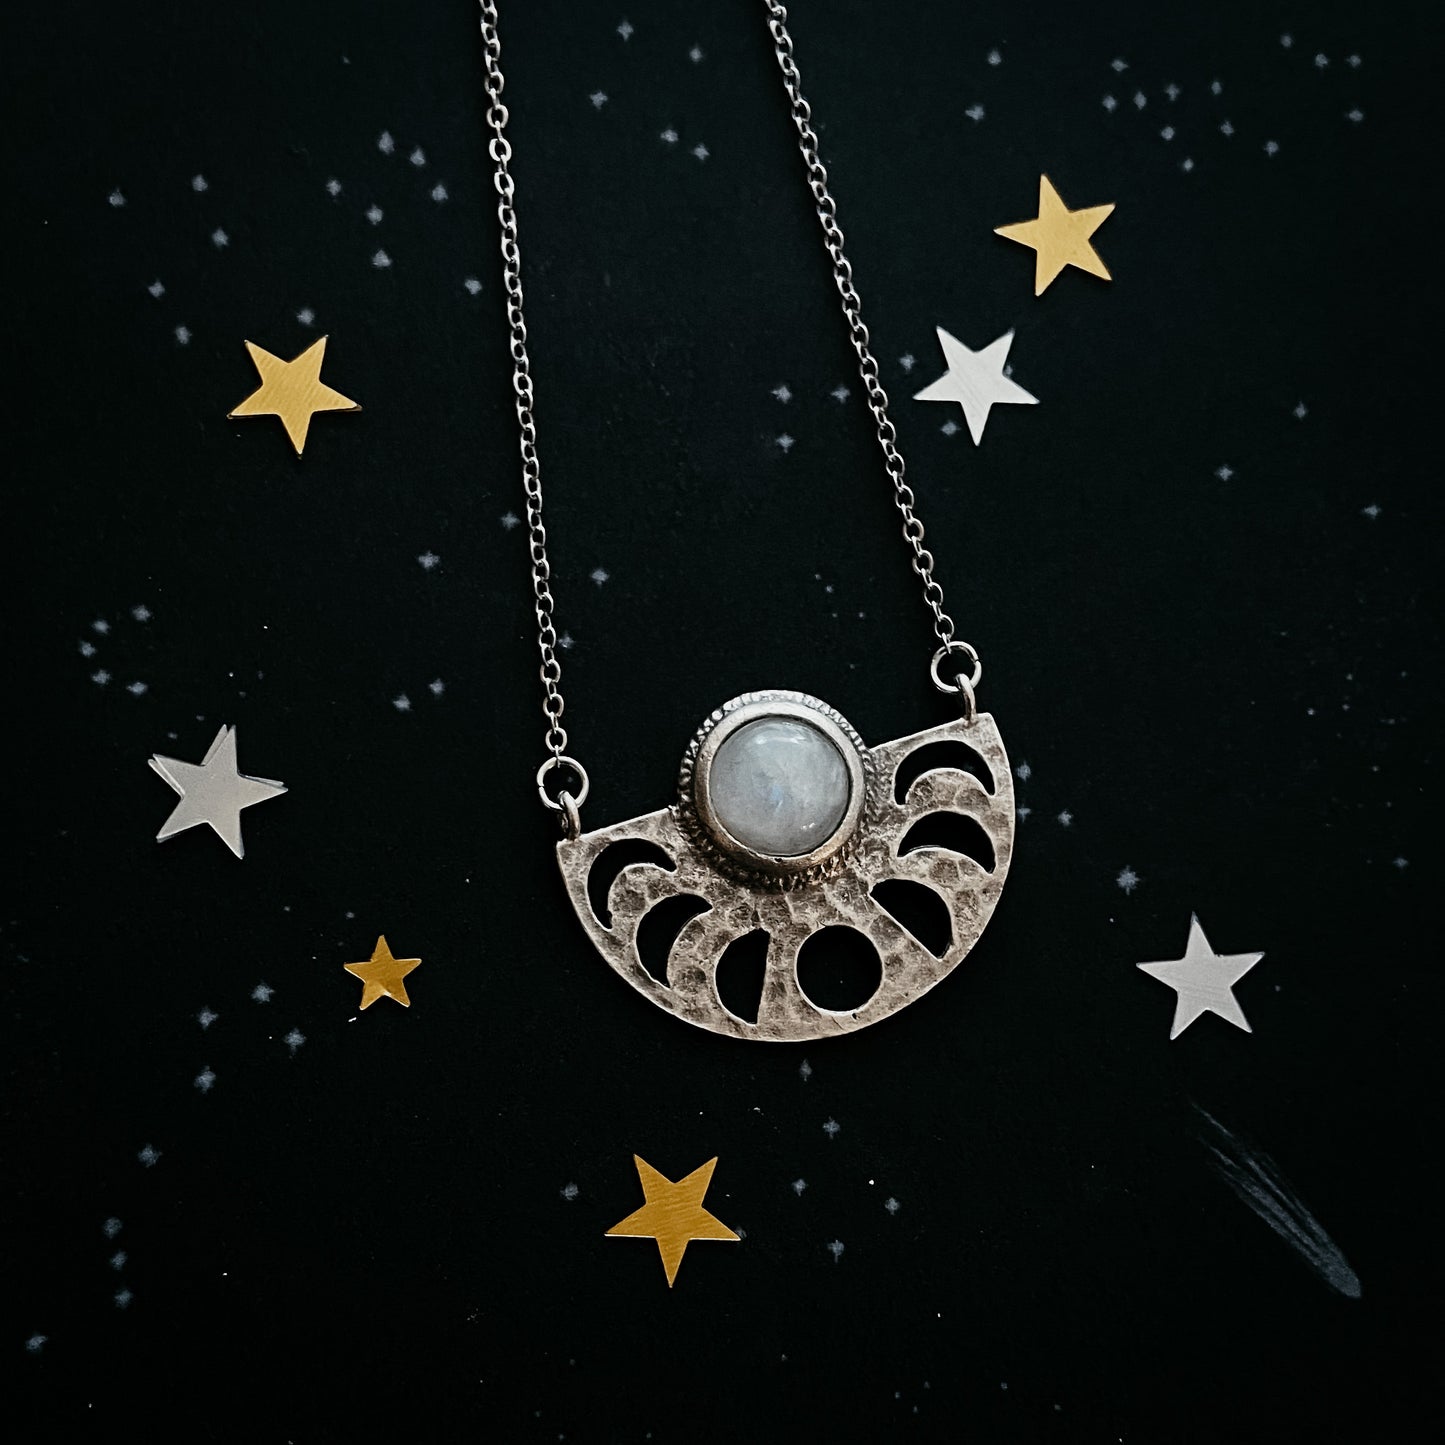 Moon Goddess Necklace - Moon Phases Rainbow Moonstone Pendant Necklace Yugen Handmade   